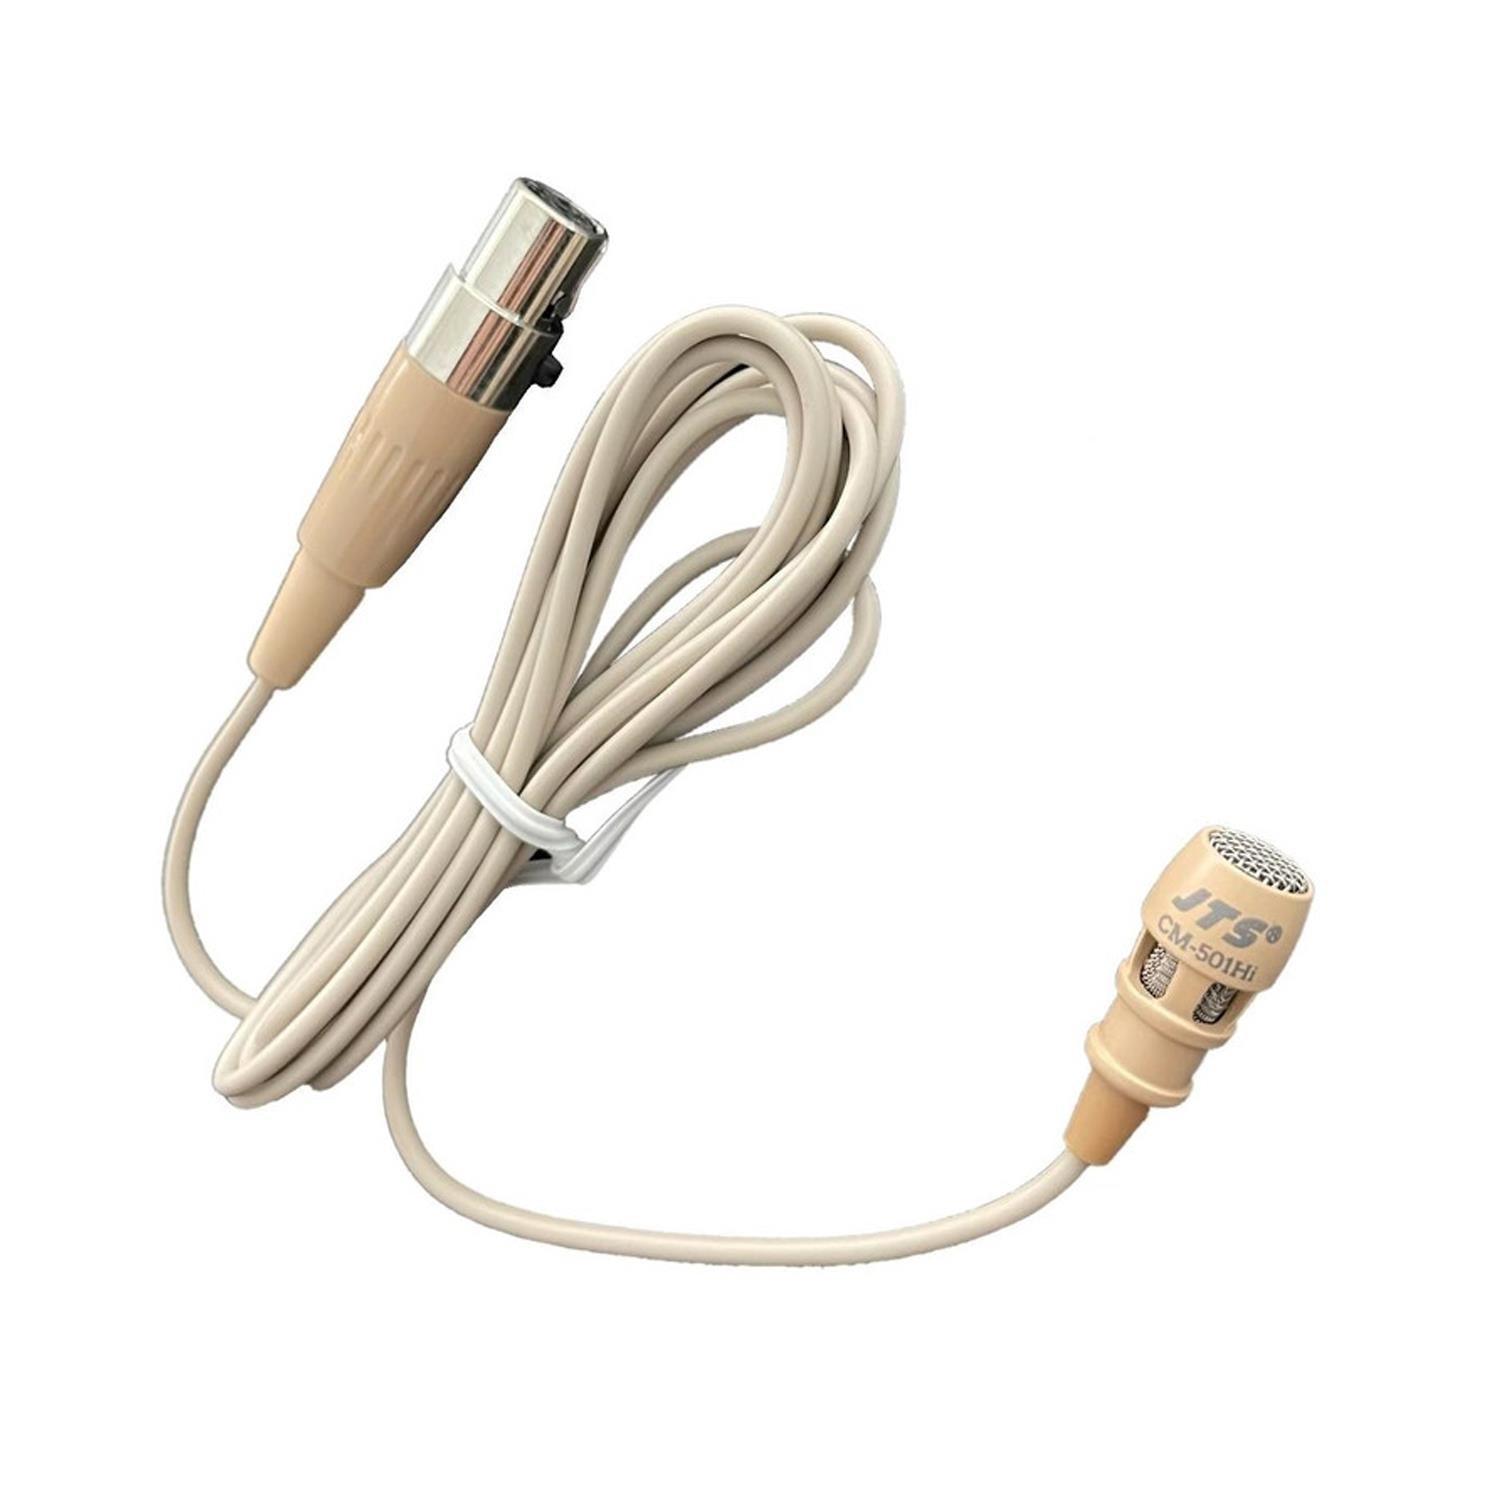 JTS CM-501Hi Beige Condenser Lavaliere Microphone - DY Pro Audio